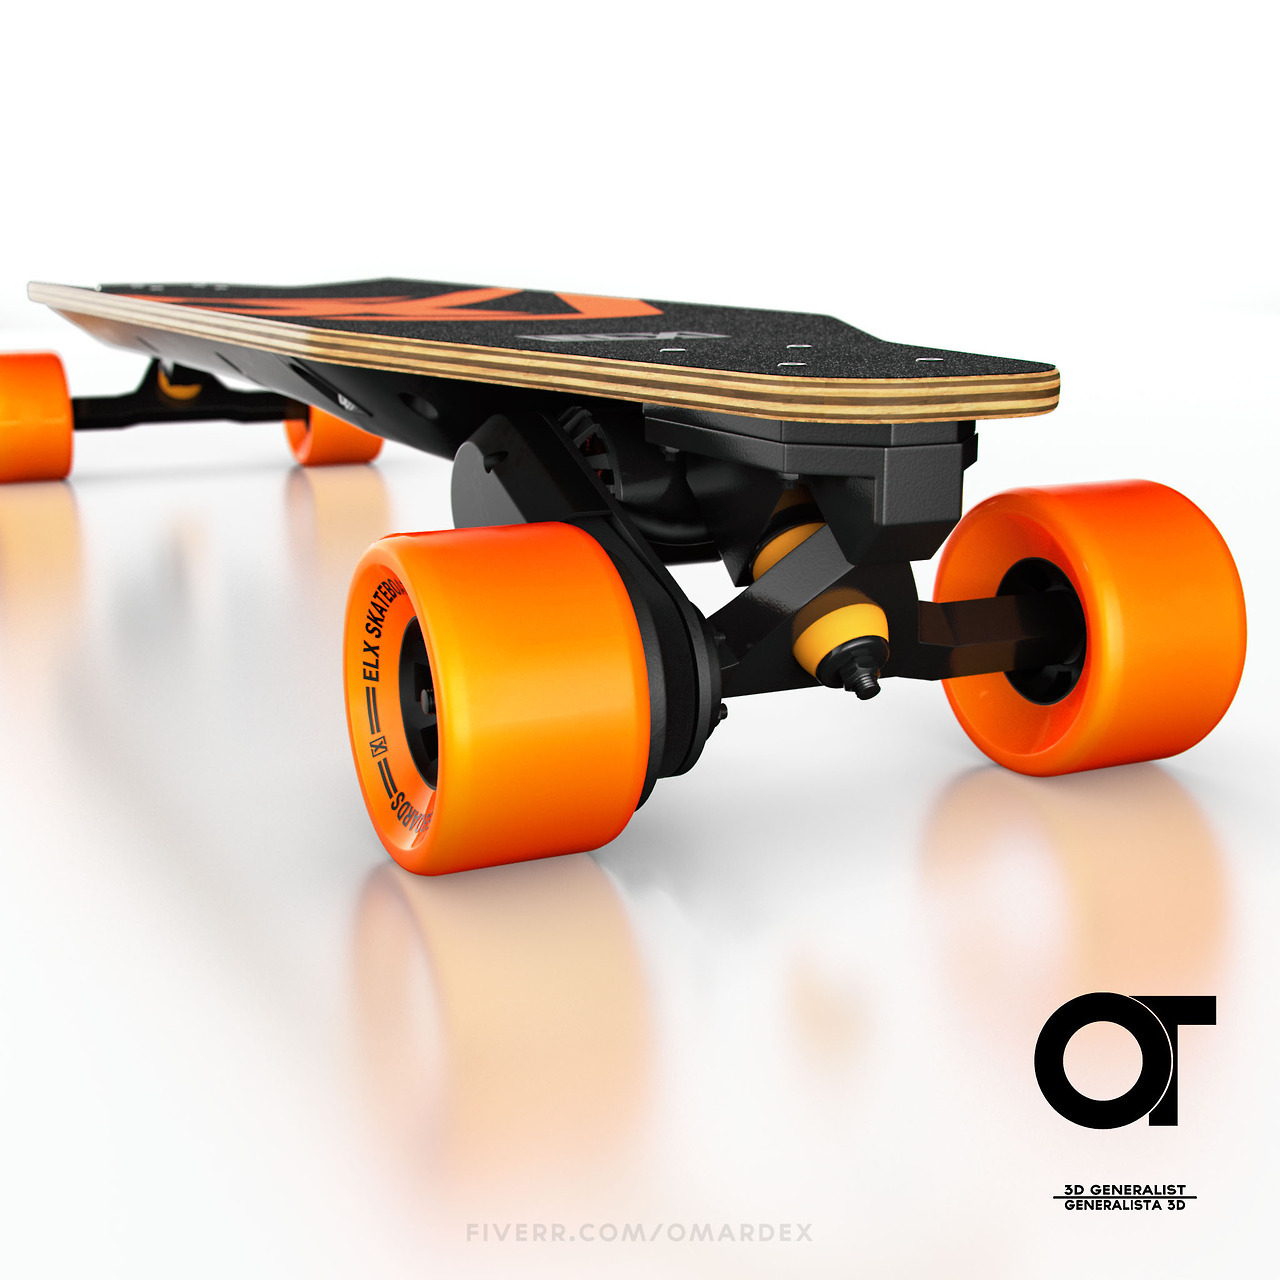 Omardex 3D \u2014 ELX electric Skateboard